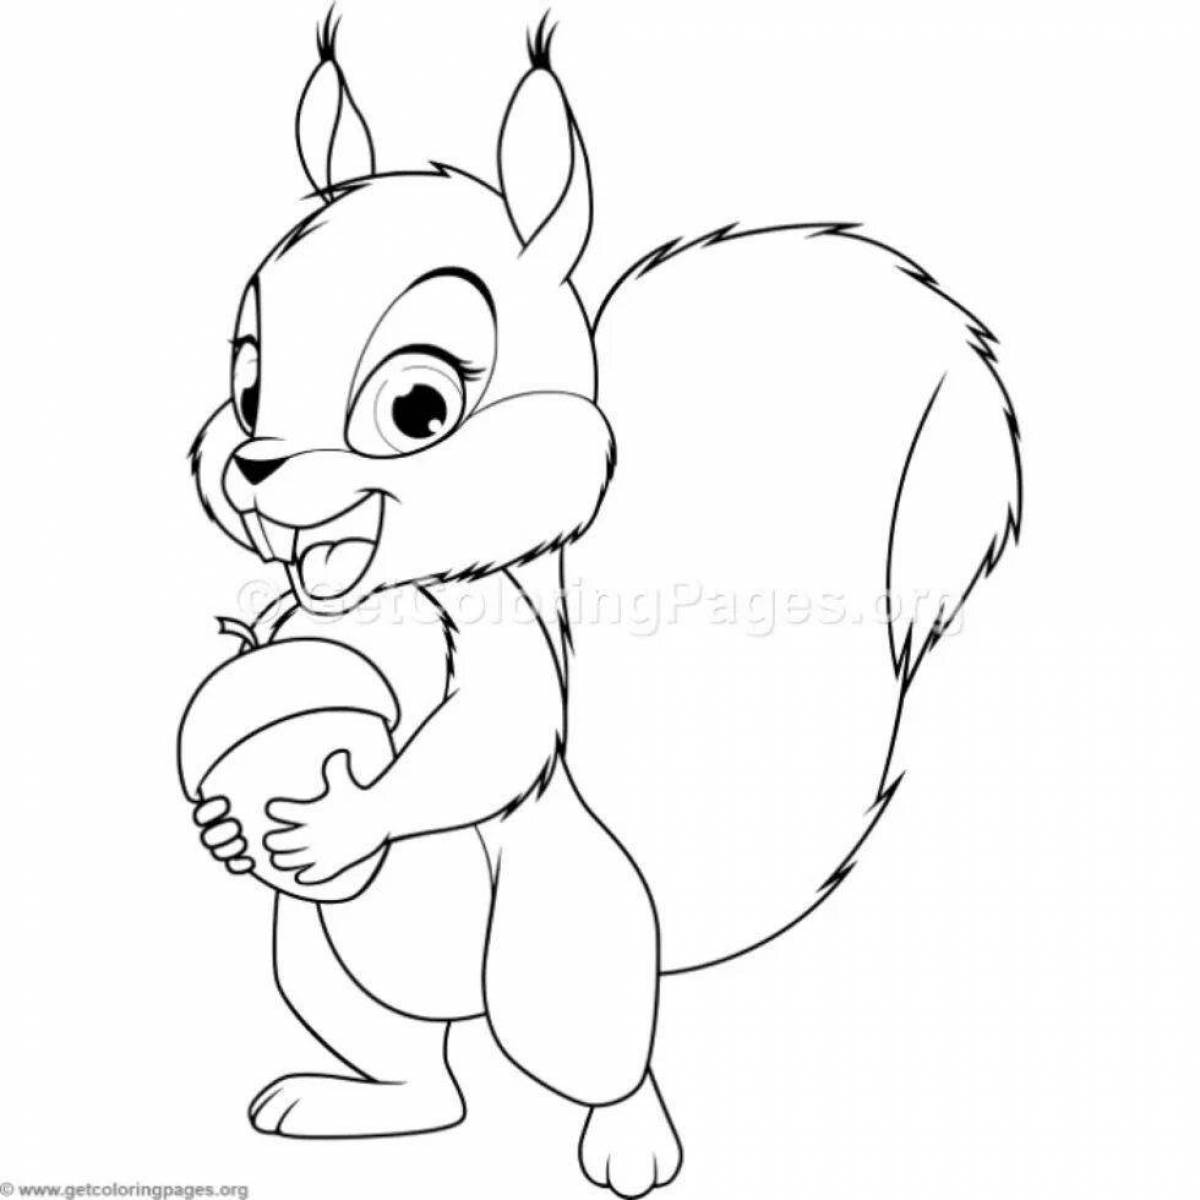 Violent squirrel coloring with nuts